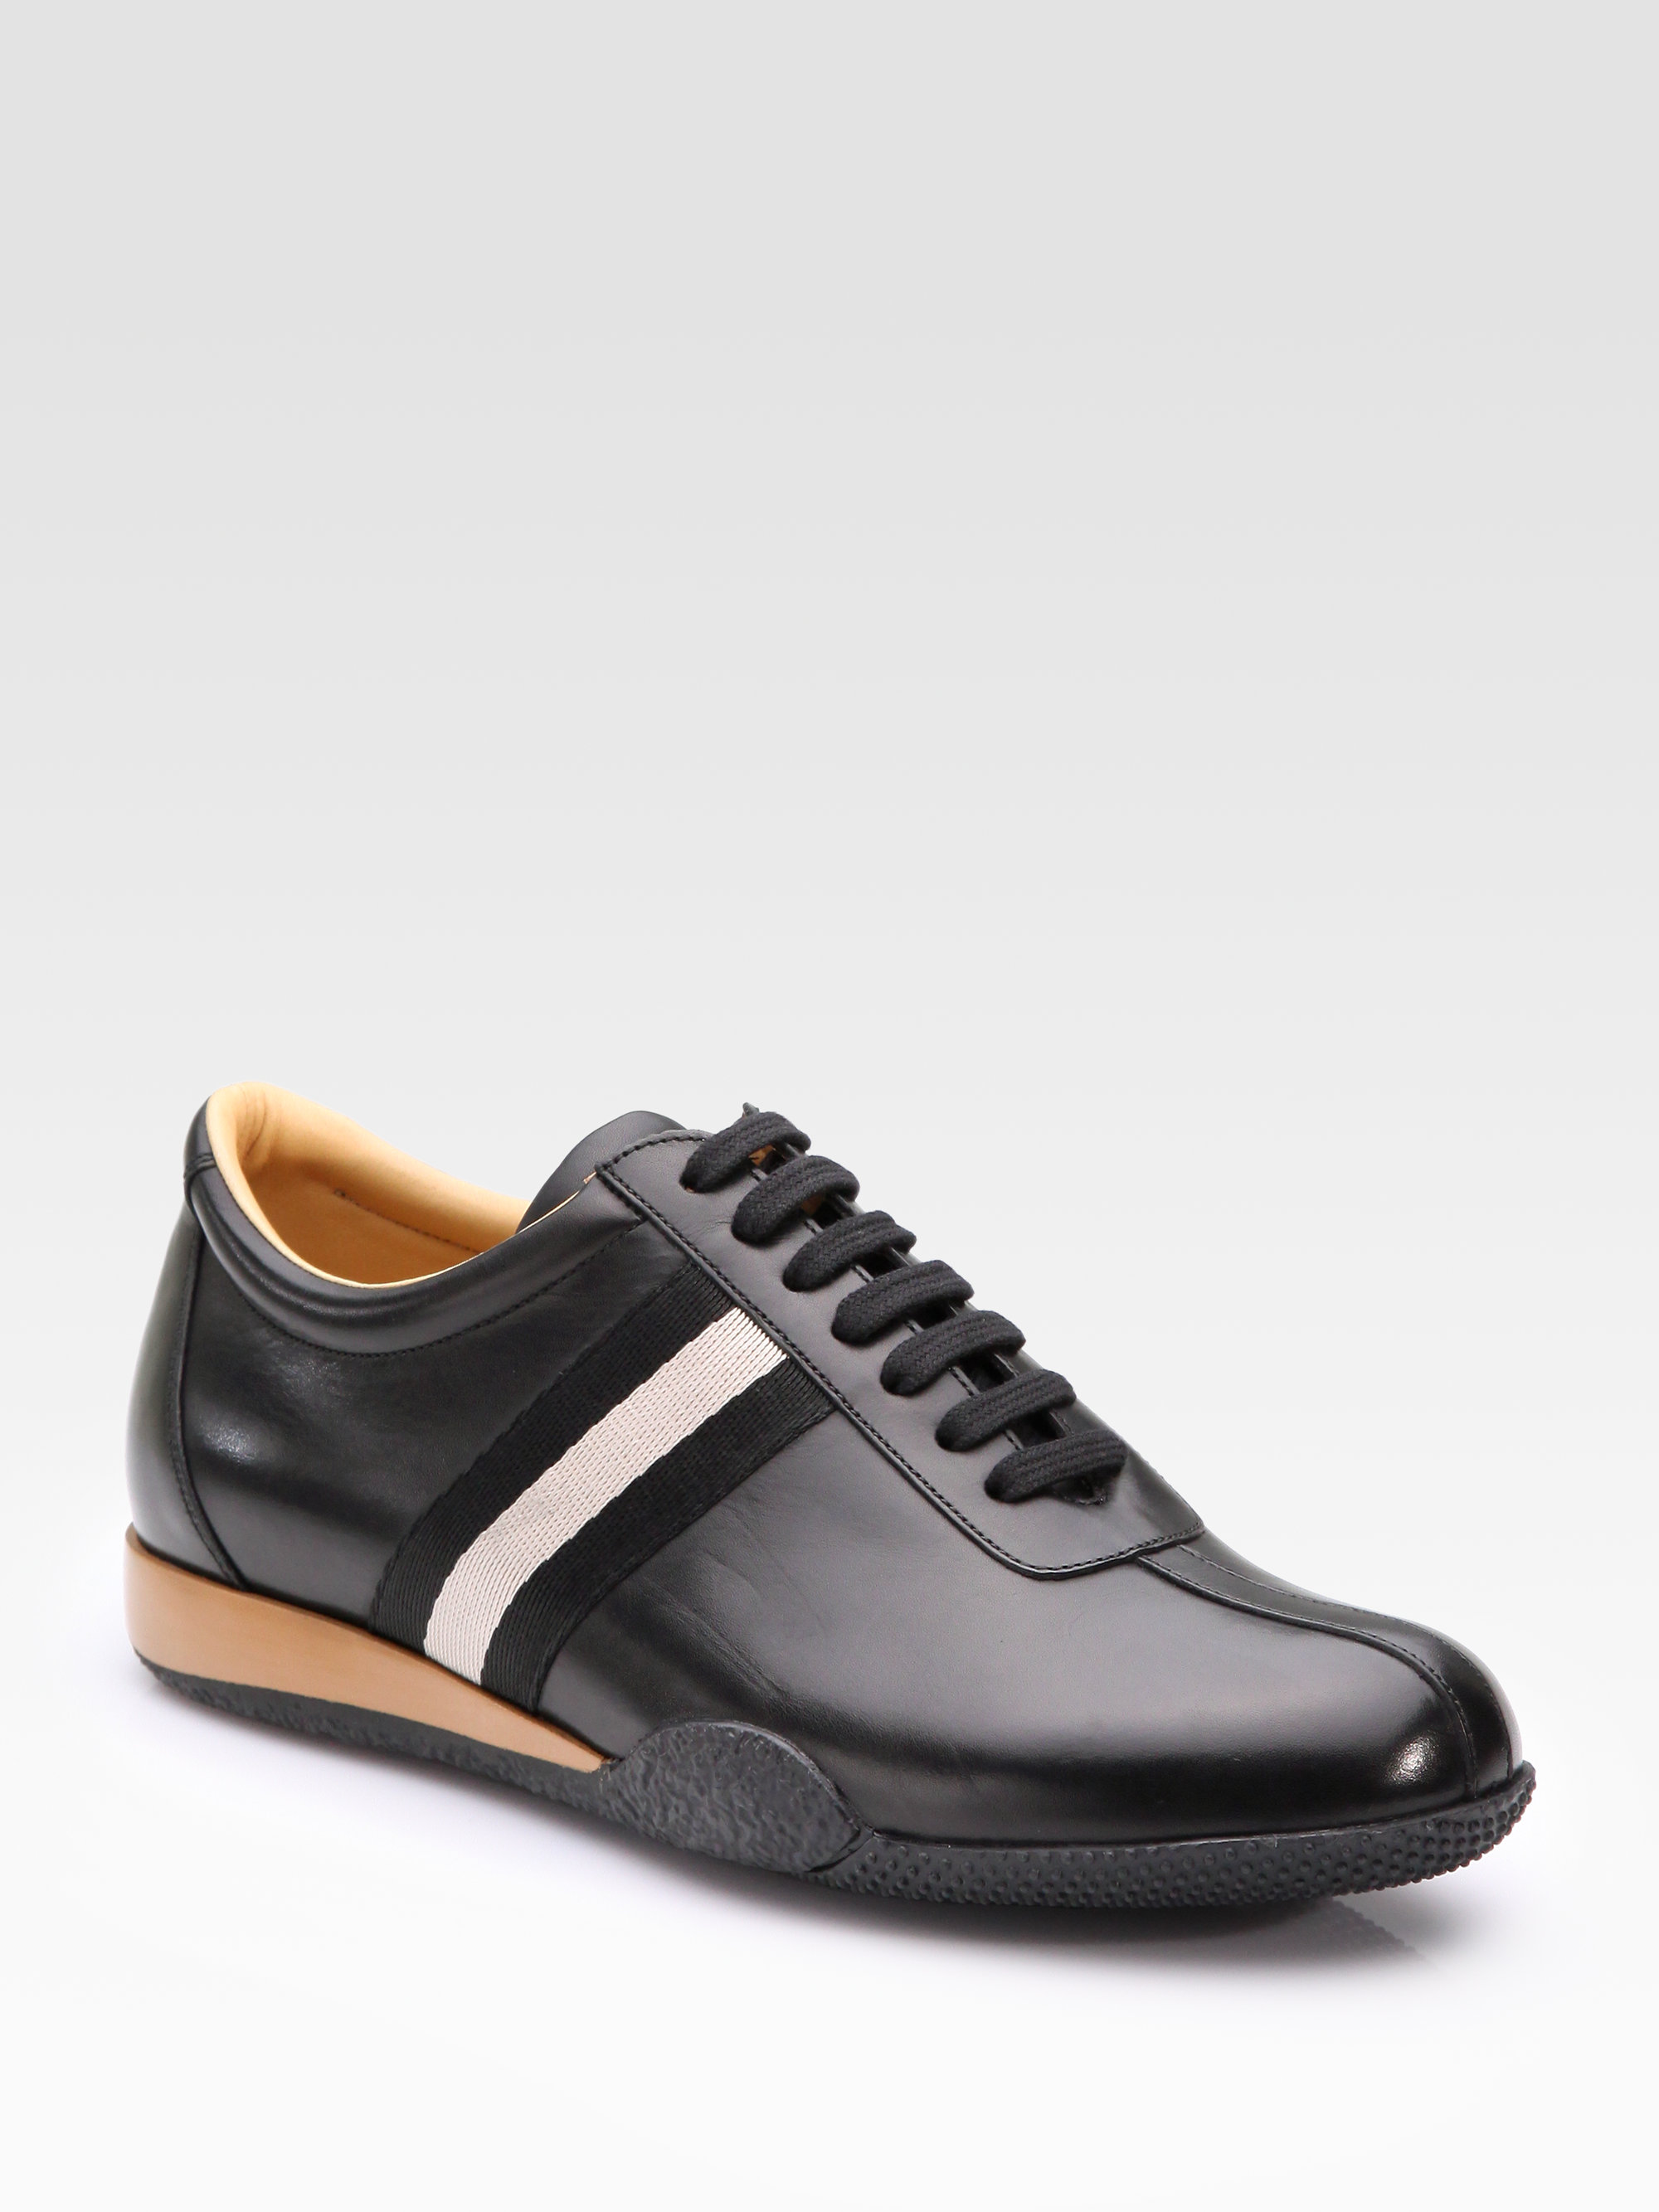 Bally Leather Freenew Sneakers in Black for Men - Lyst